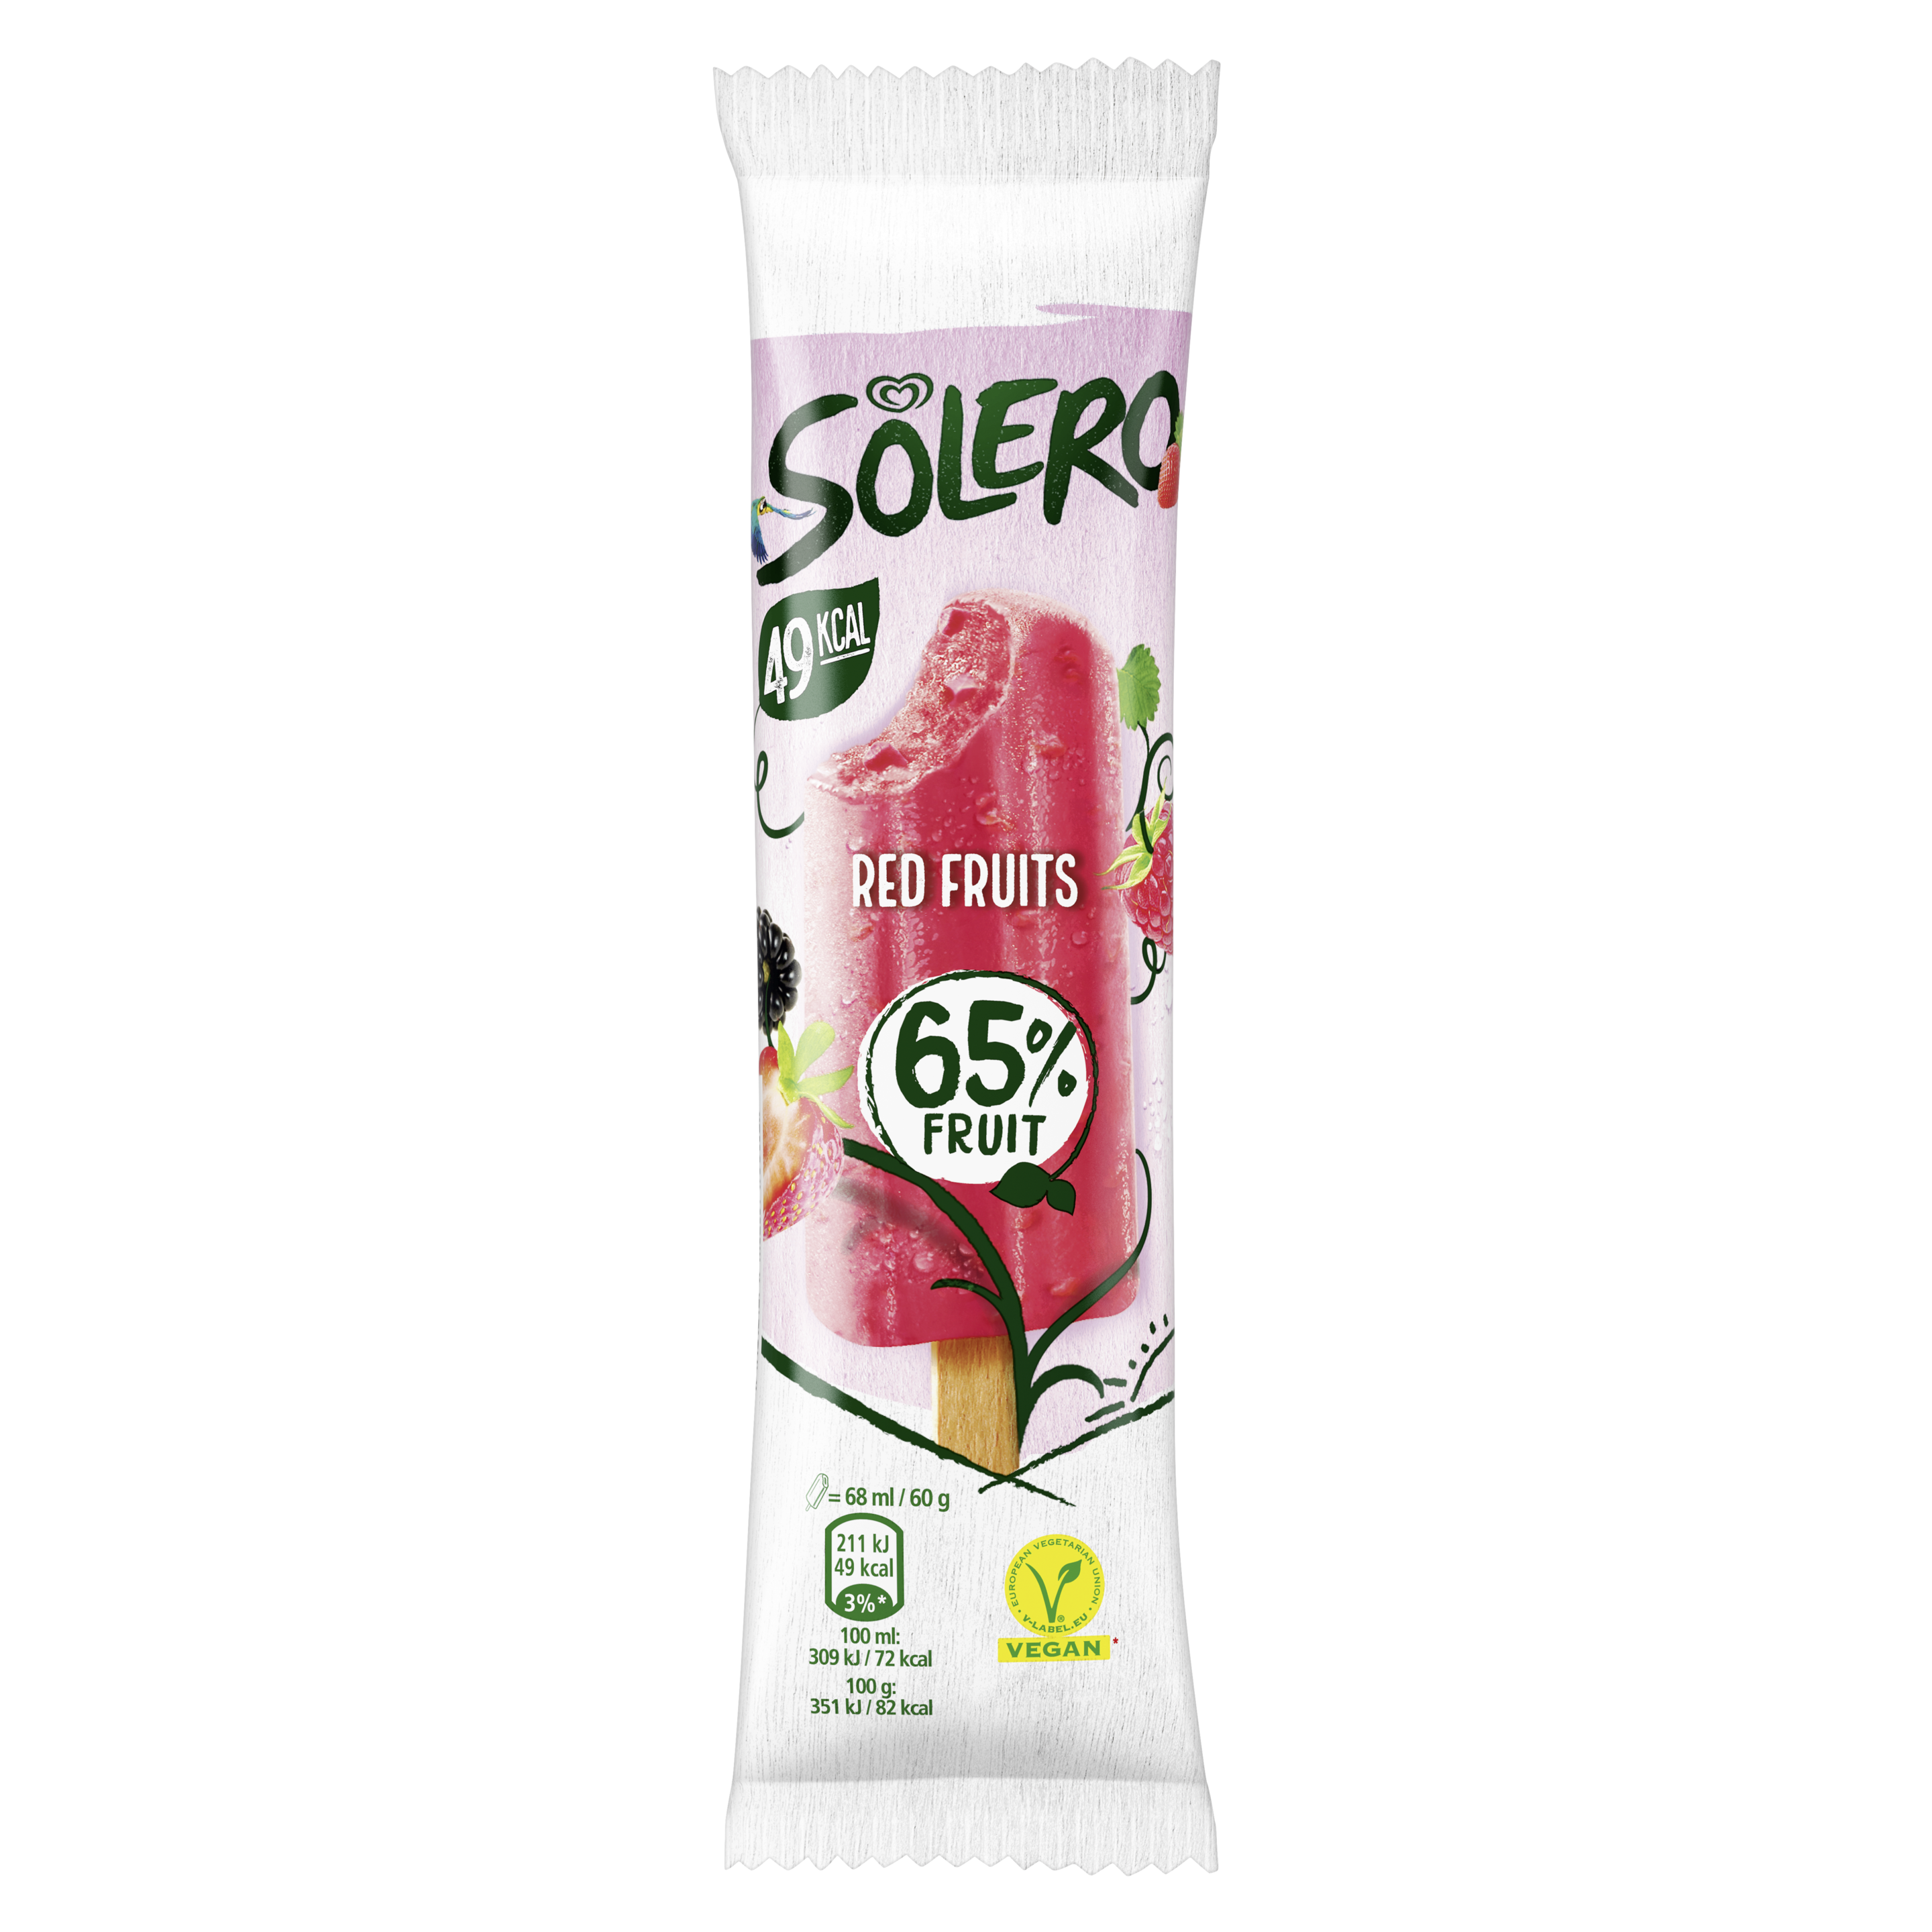 Solero Red Fruits 65% 68ml